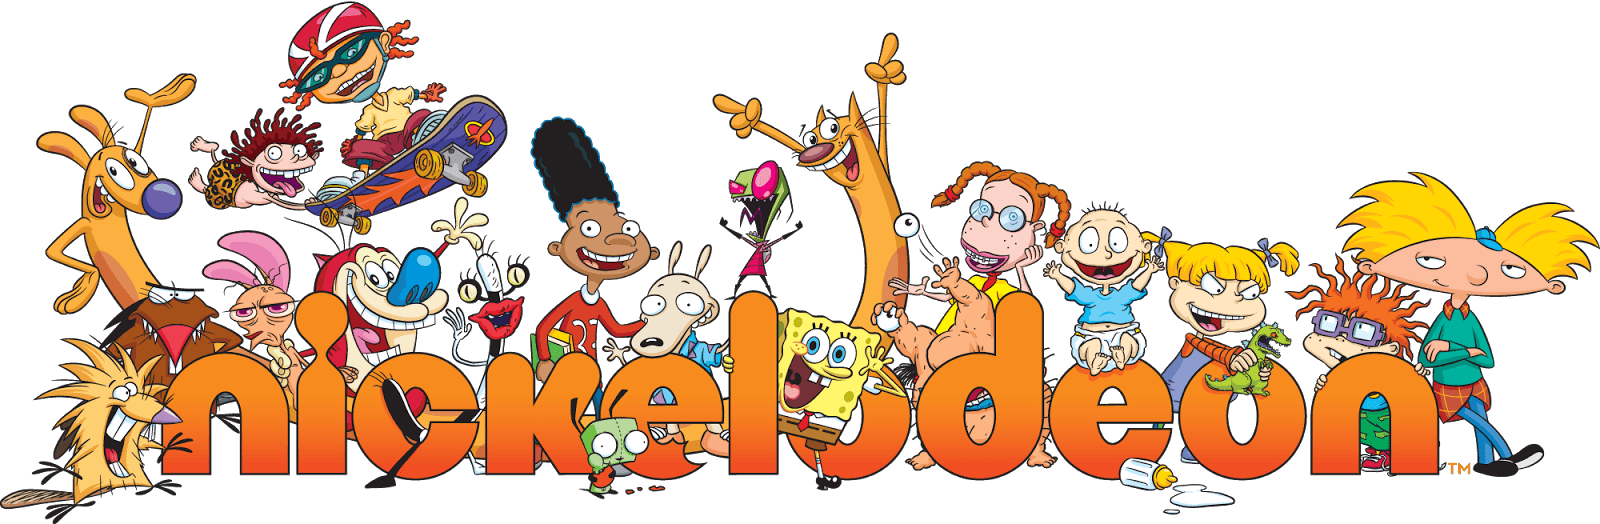 Nicksplat Logo - Nickelodeon-Logo-With-90s-Nicktoons-Stars-Characters-NickSplat-The ...